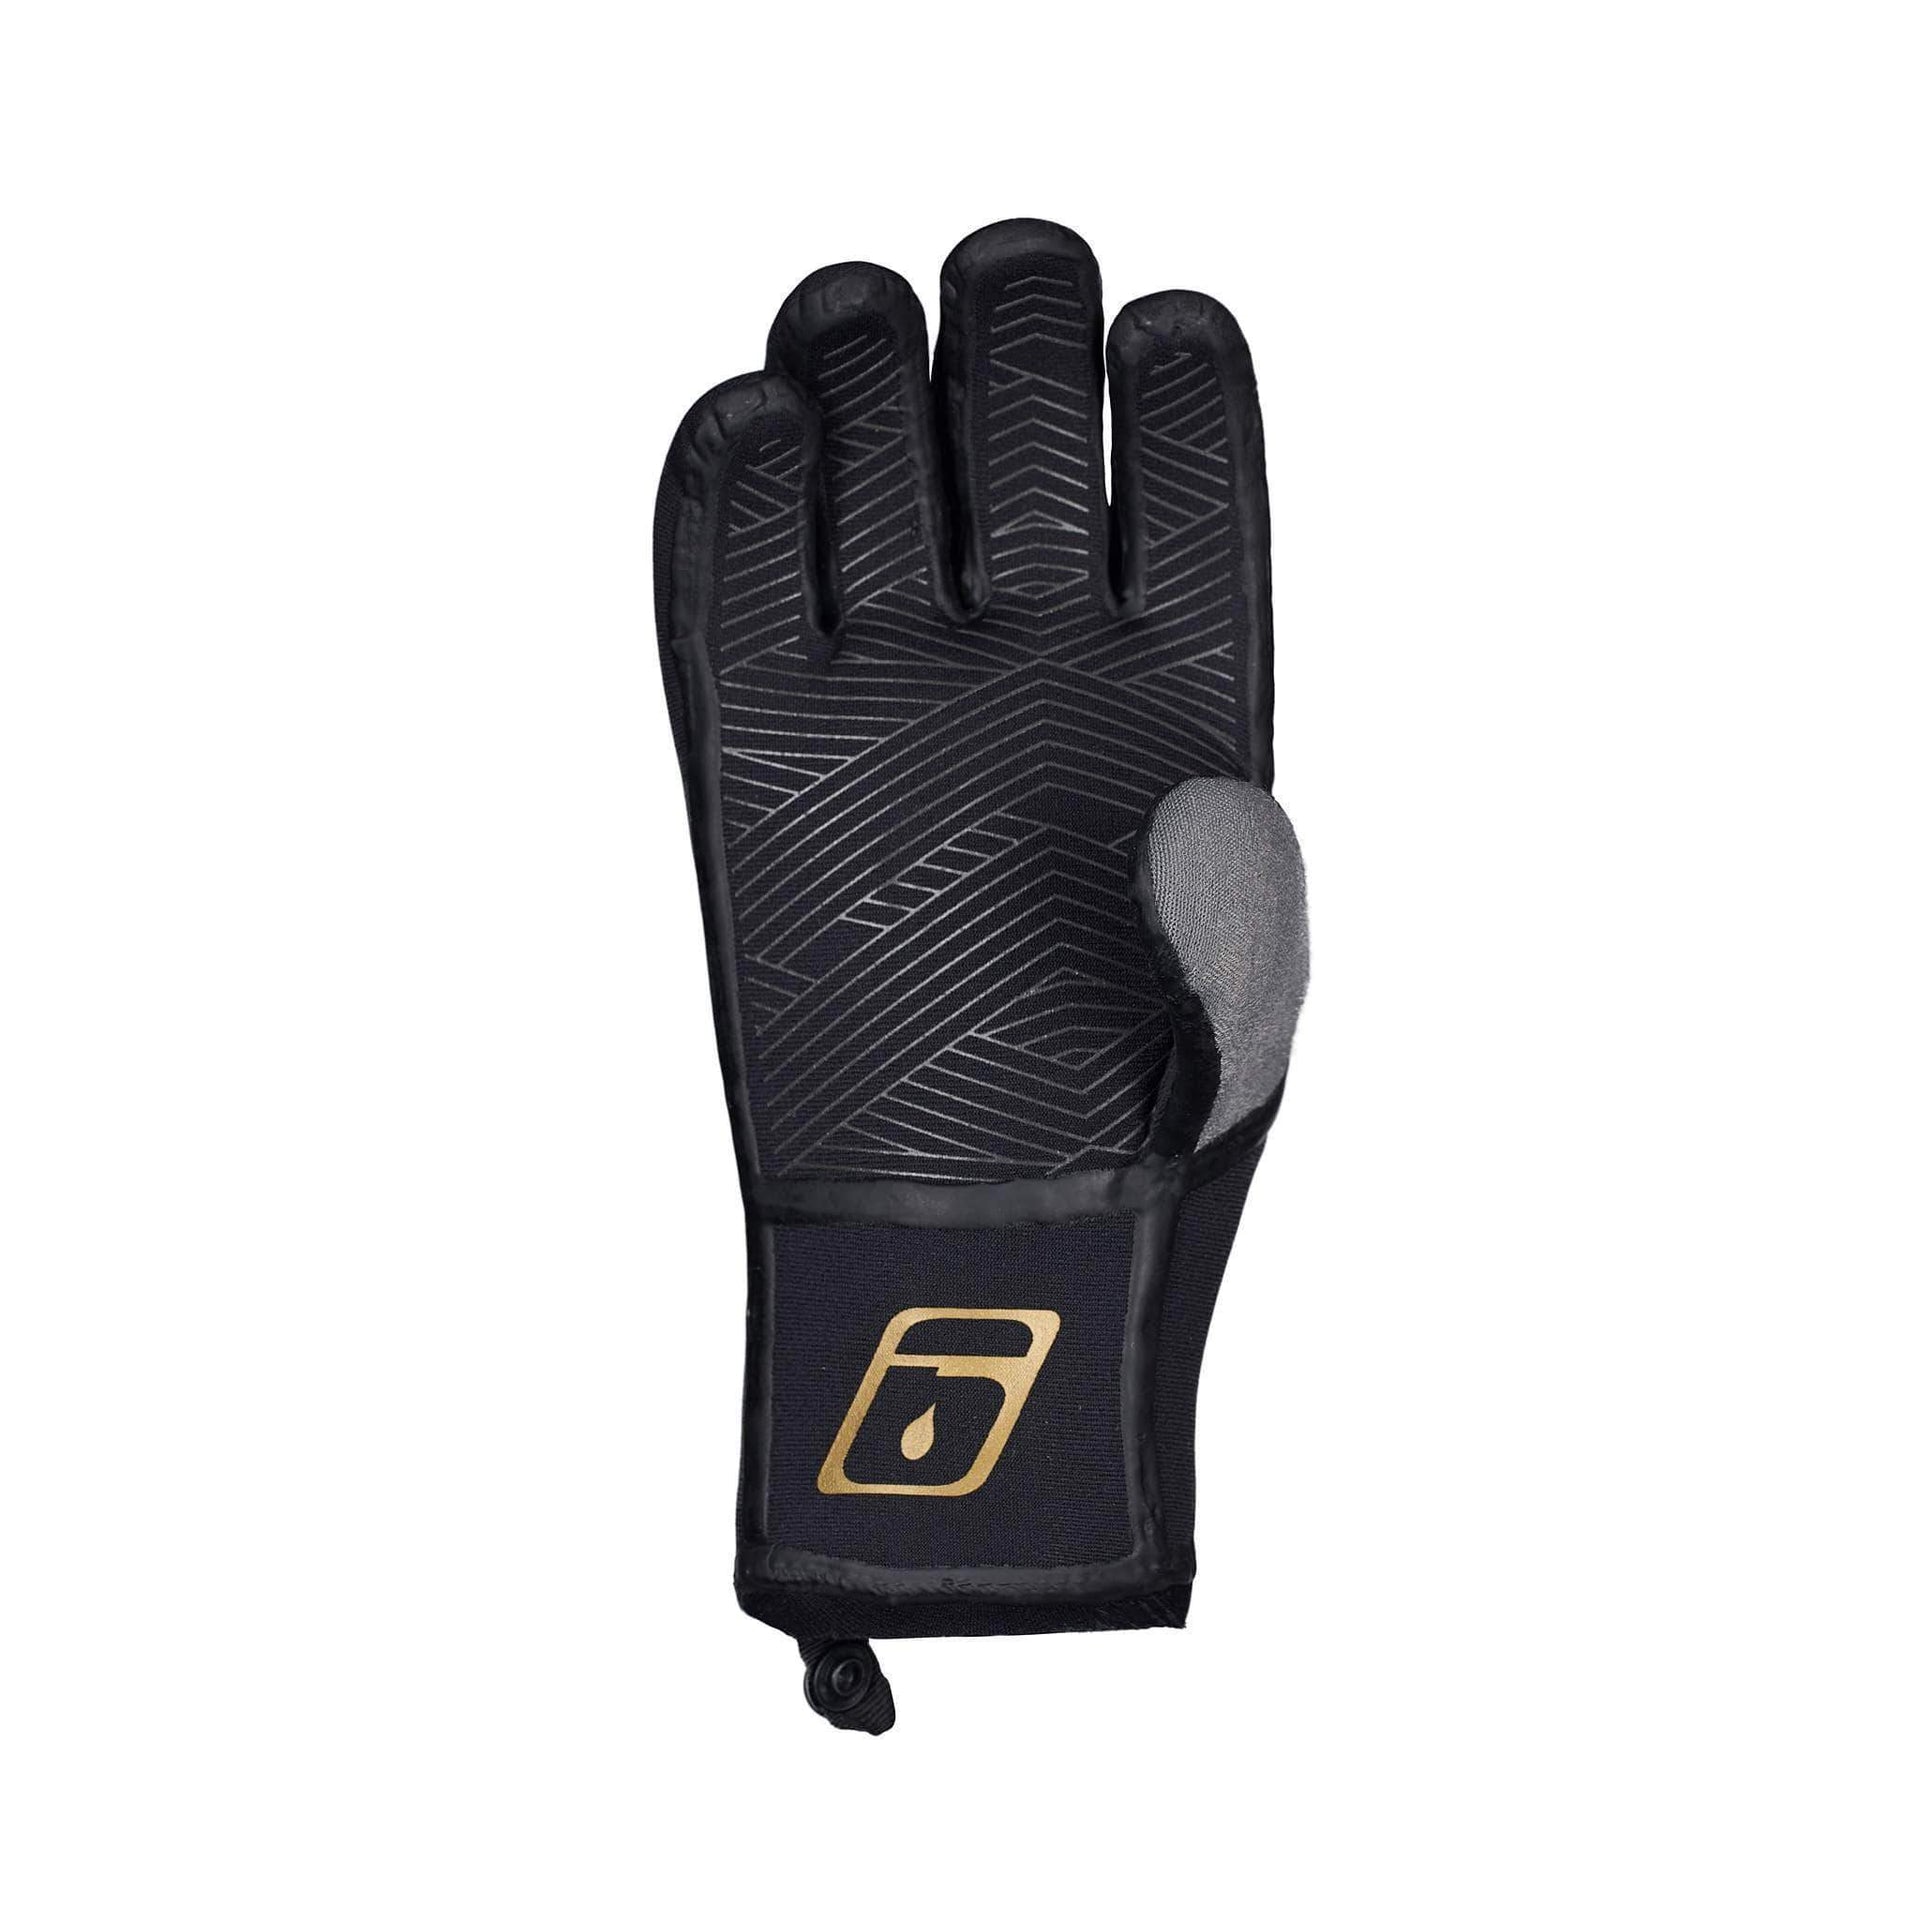 Granite Glove